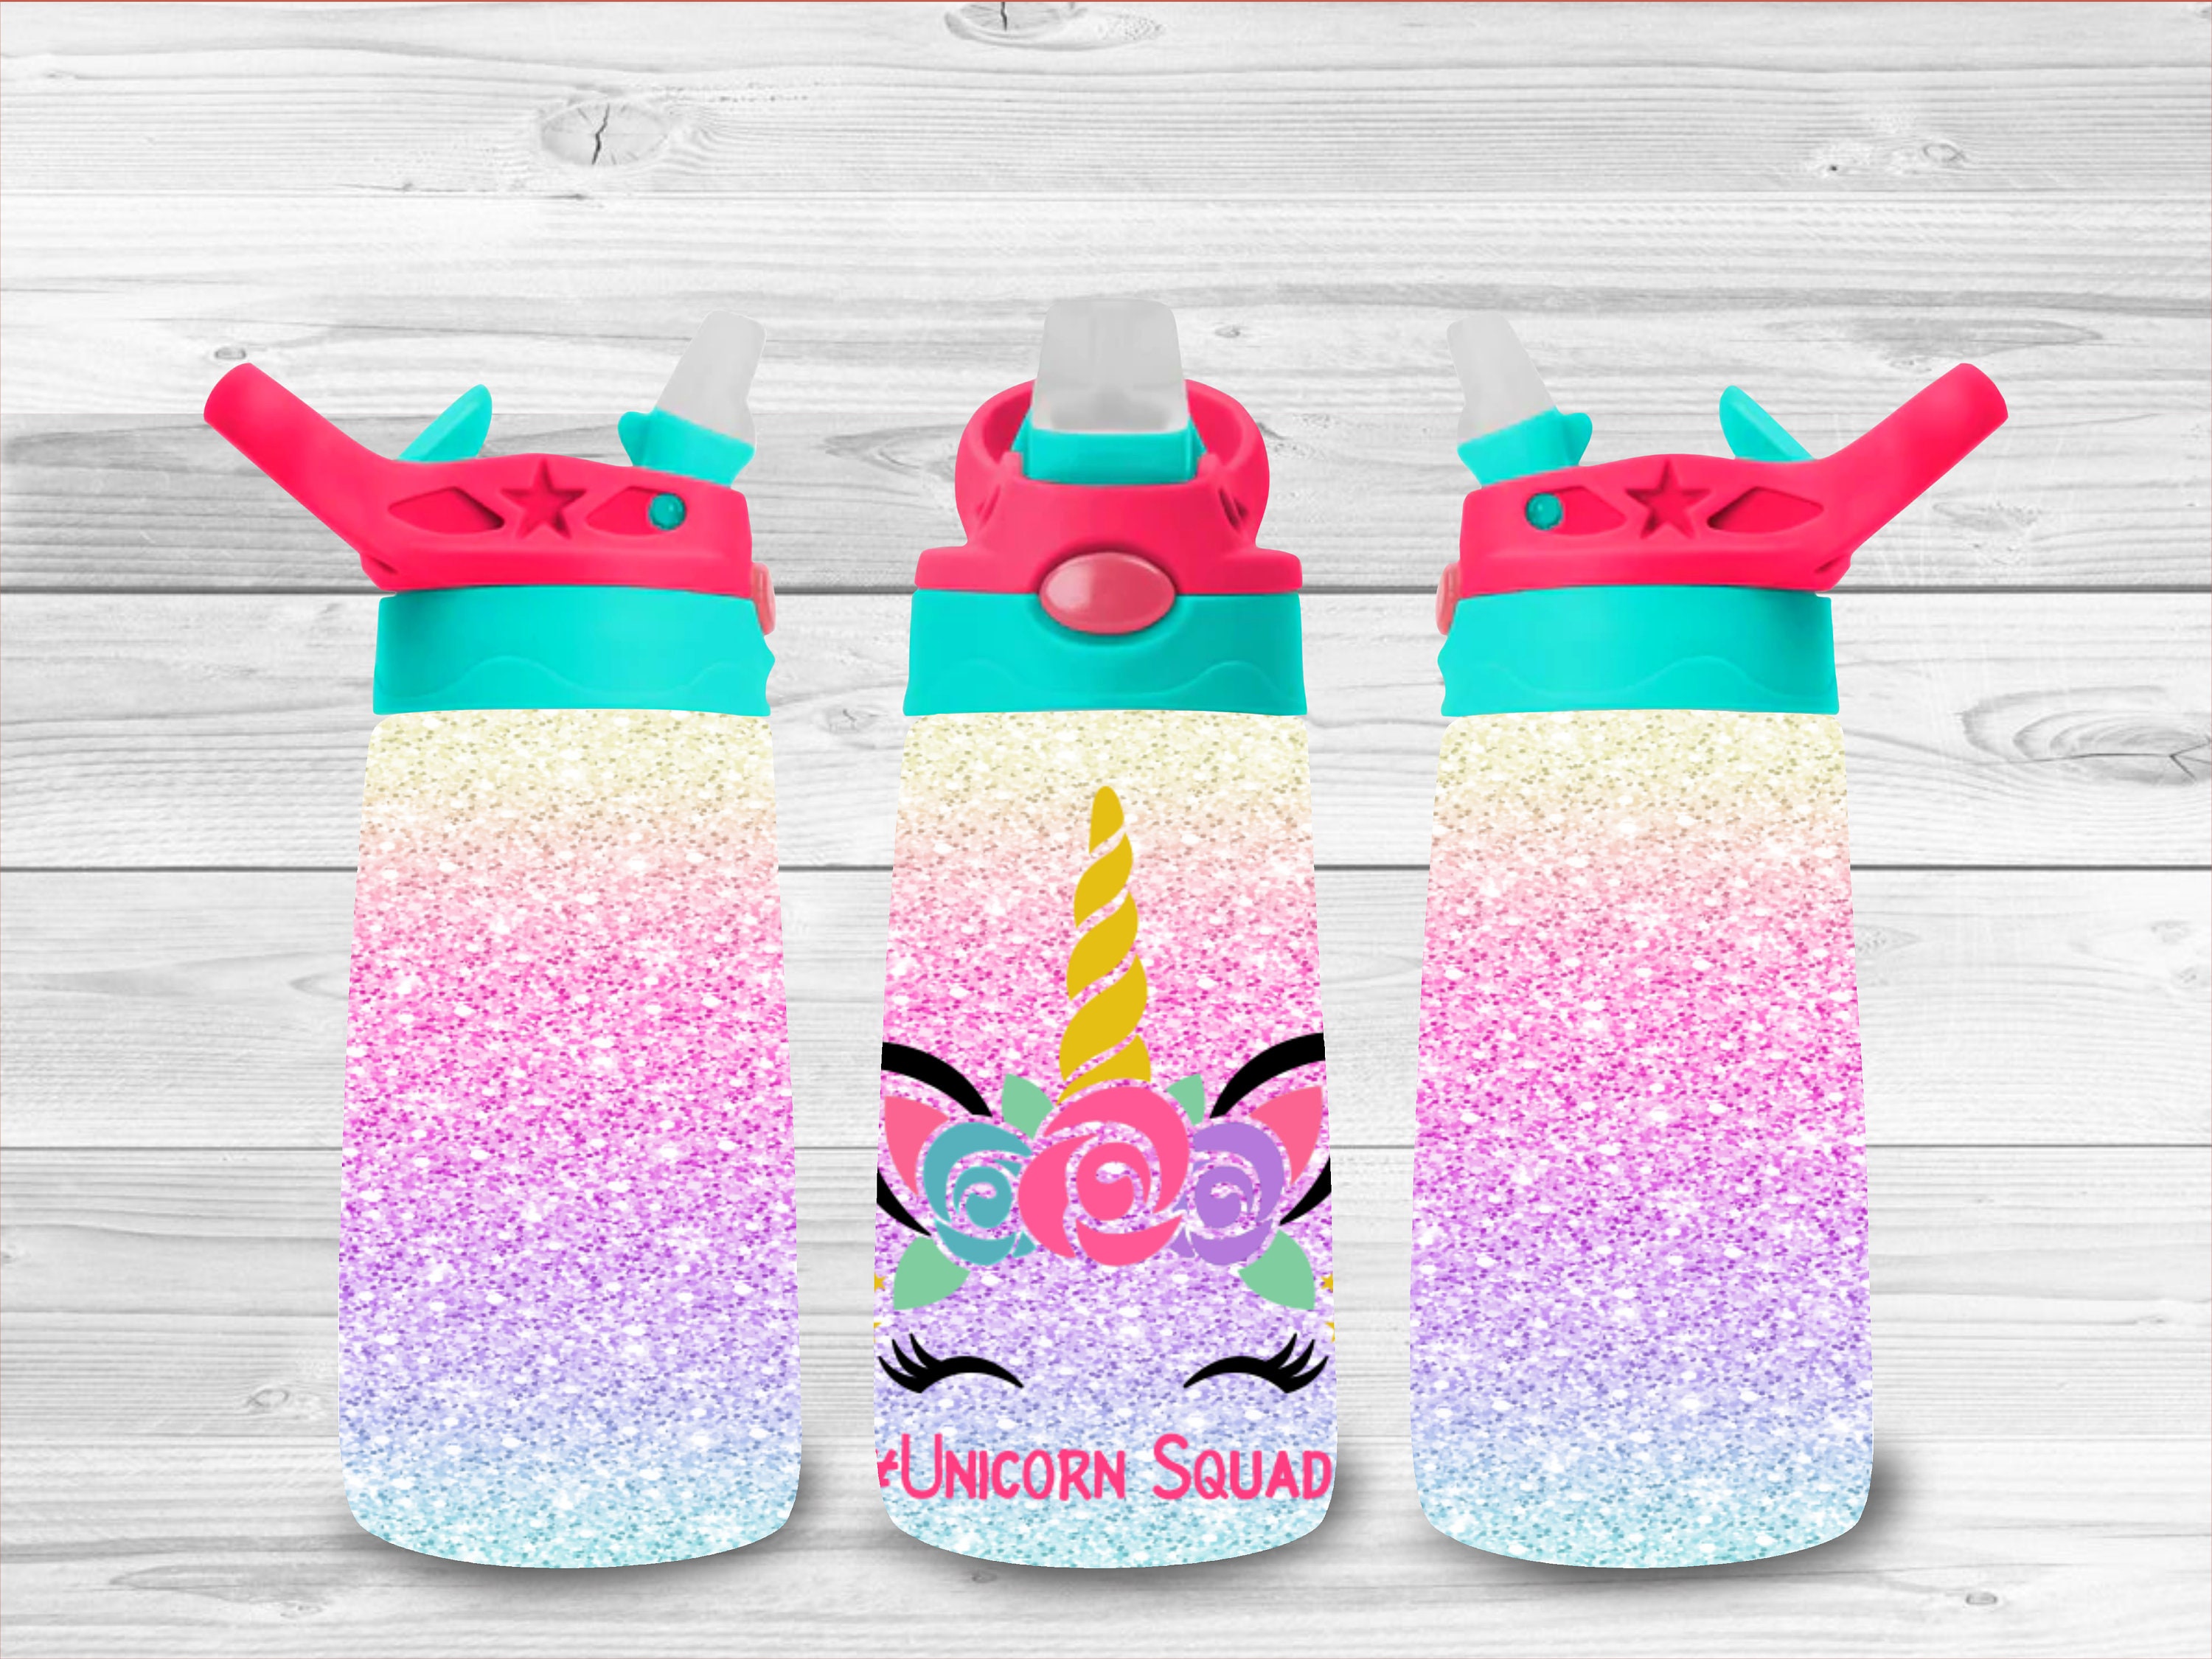 Unicorn - Sparkle - Children's Tumbler, Kid's Water Bottle, Water Bott